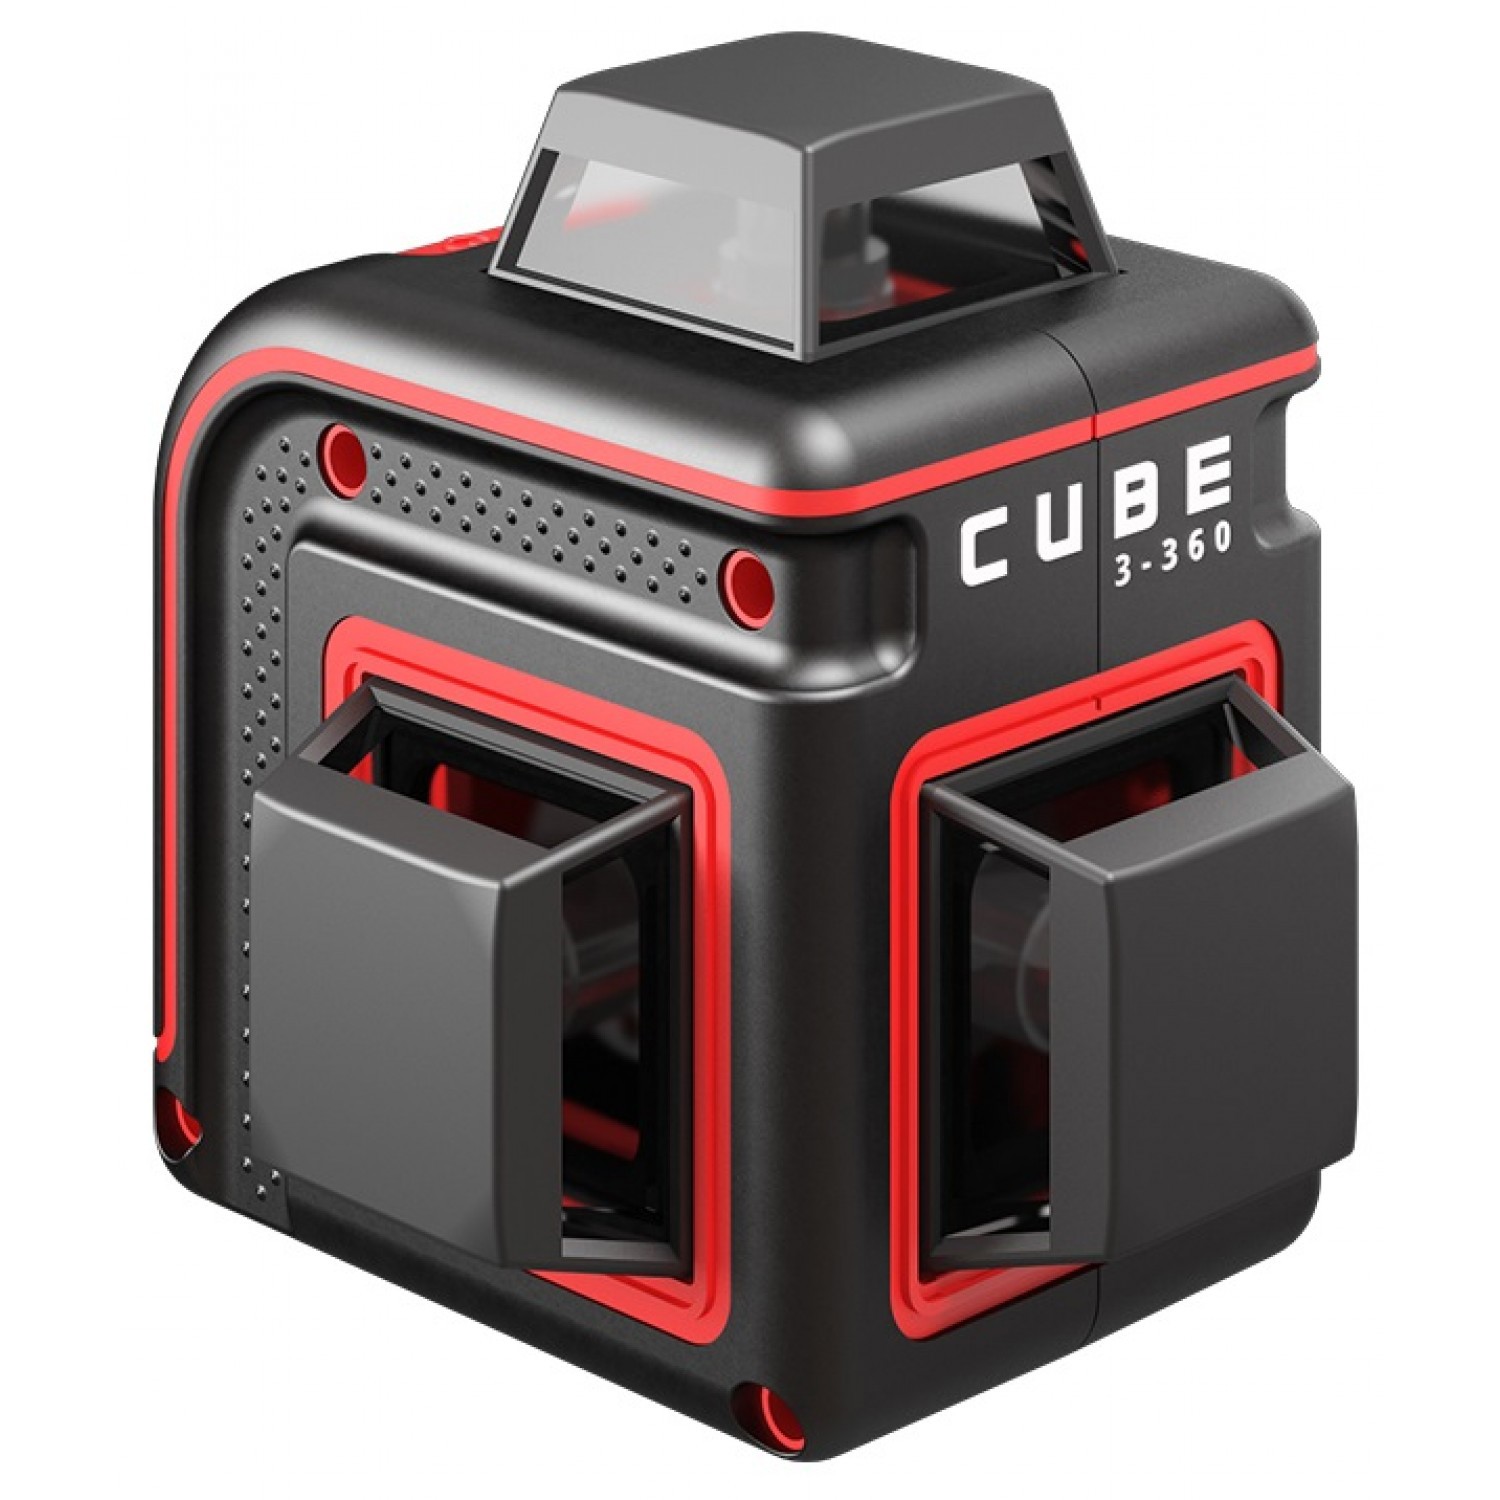 Ada cube 360 basic. Лазерный уровень ada Cube 3-360 Home Edition а00565. Нивелир лазерный ada Cube 360 professional Edition. Лазерный уровень ada Cube 360 Basic Edition. Лазерный уровень ada Cube 3-360 Green Basic Edition.